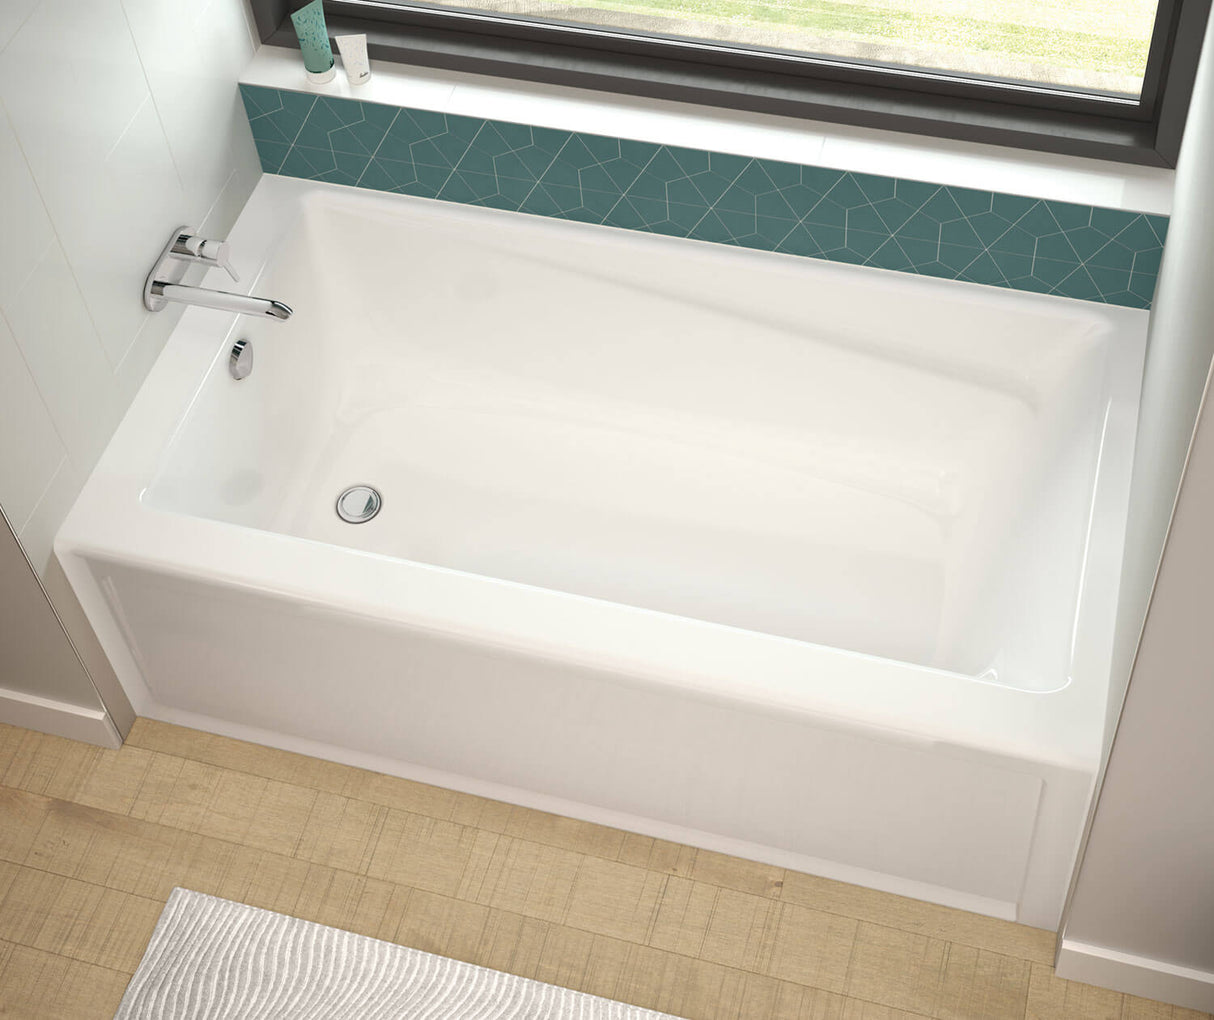 MAAX 105520-103-001-104 Exhibit 6032 IFS Acrylic Alcove Left-Hand Drain Aeroeffect Bathtub in White